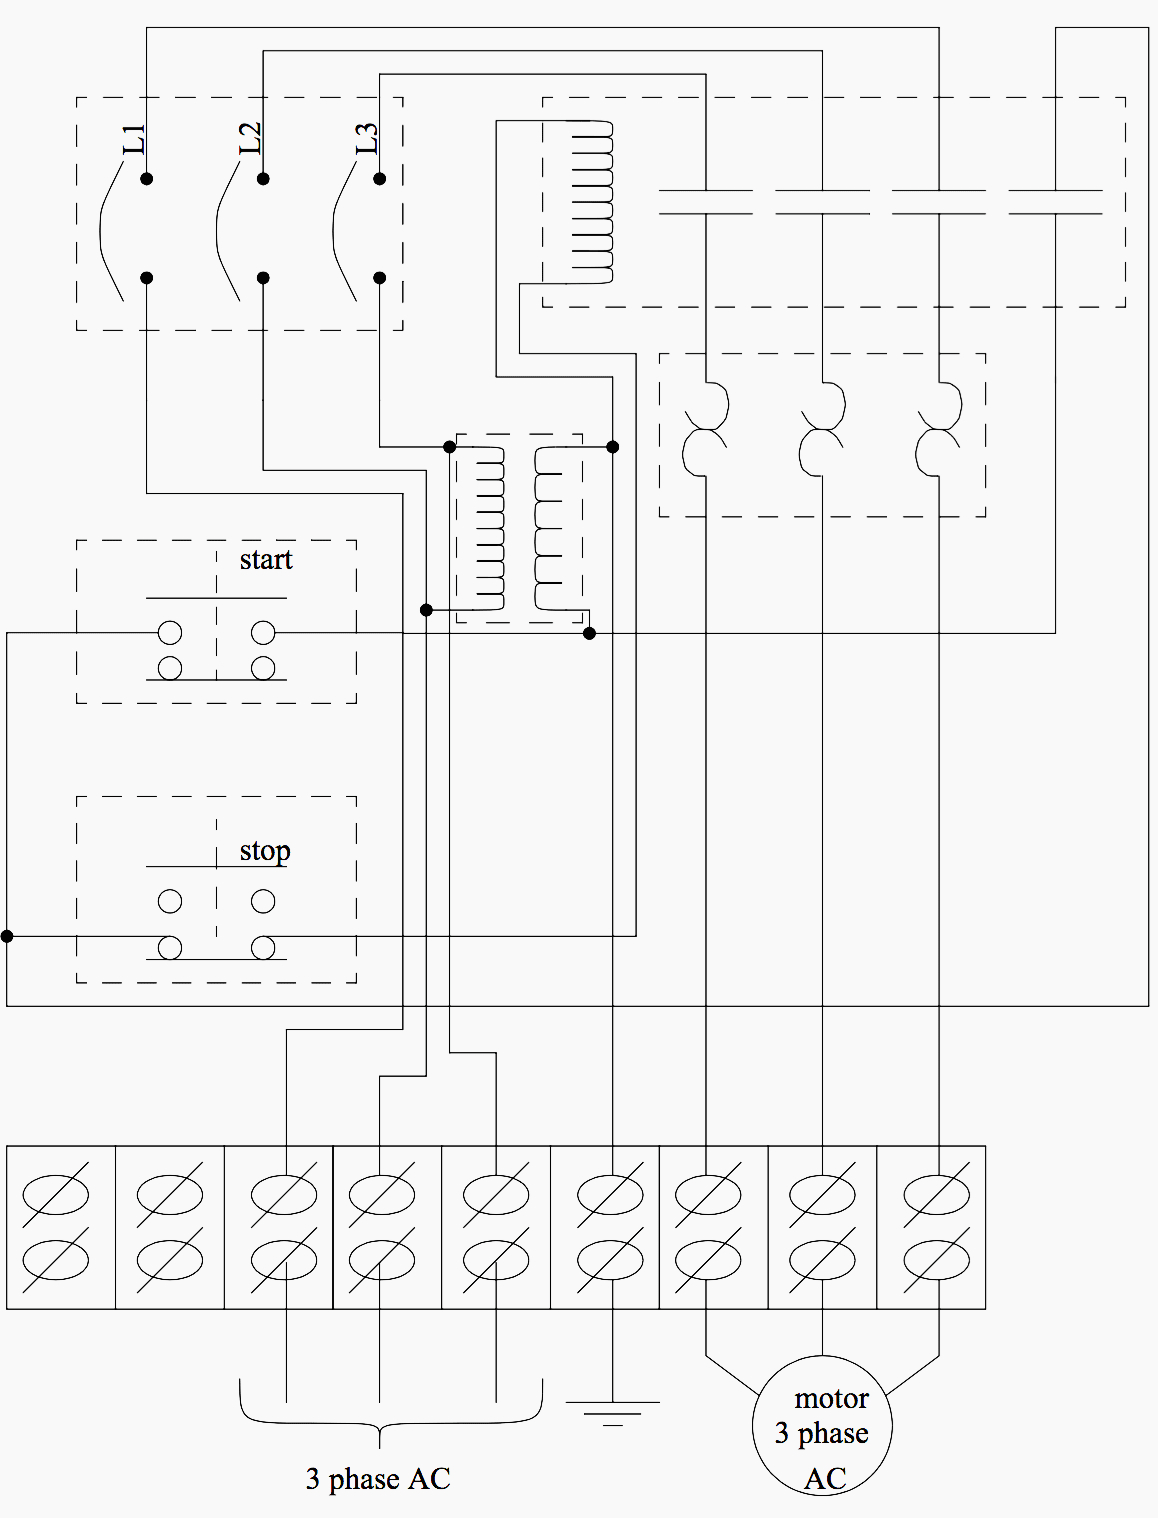 Basic Electrical Design Of A Plc Panel (Wiring Diagrams) | Eep - Plc Wiring Diagram